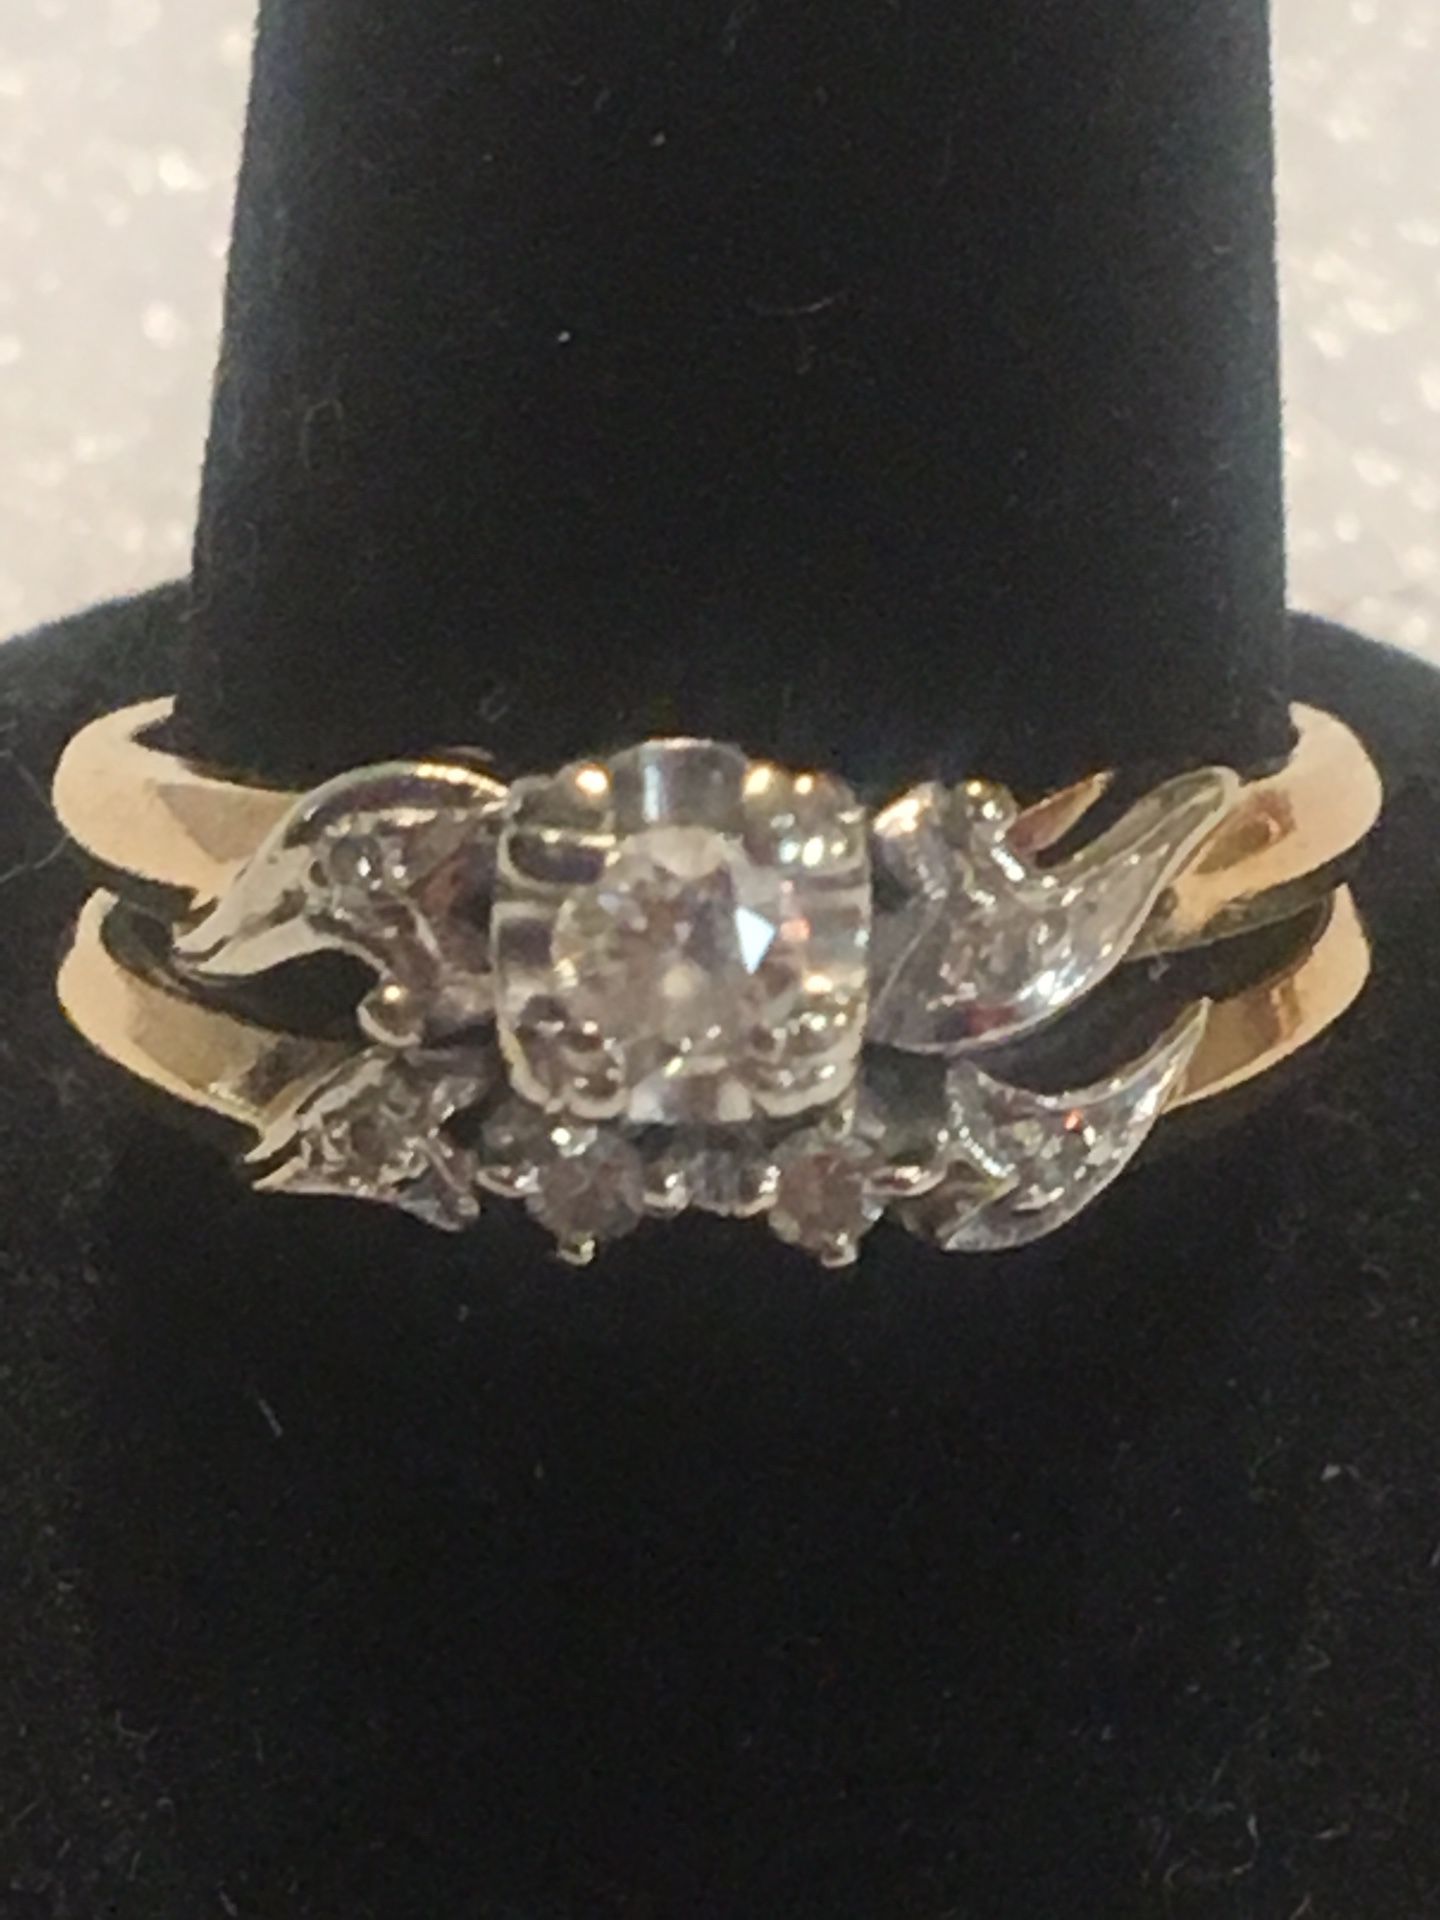 14K Gold & Diamond Wedding & Engagement Ring Set - VINTAGE- 4.3g - Size: 6.25 - 3mm main Stone - 2 - 2mm stones on engagement- 2- 1mm Stones on each